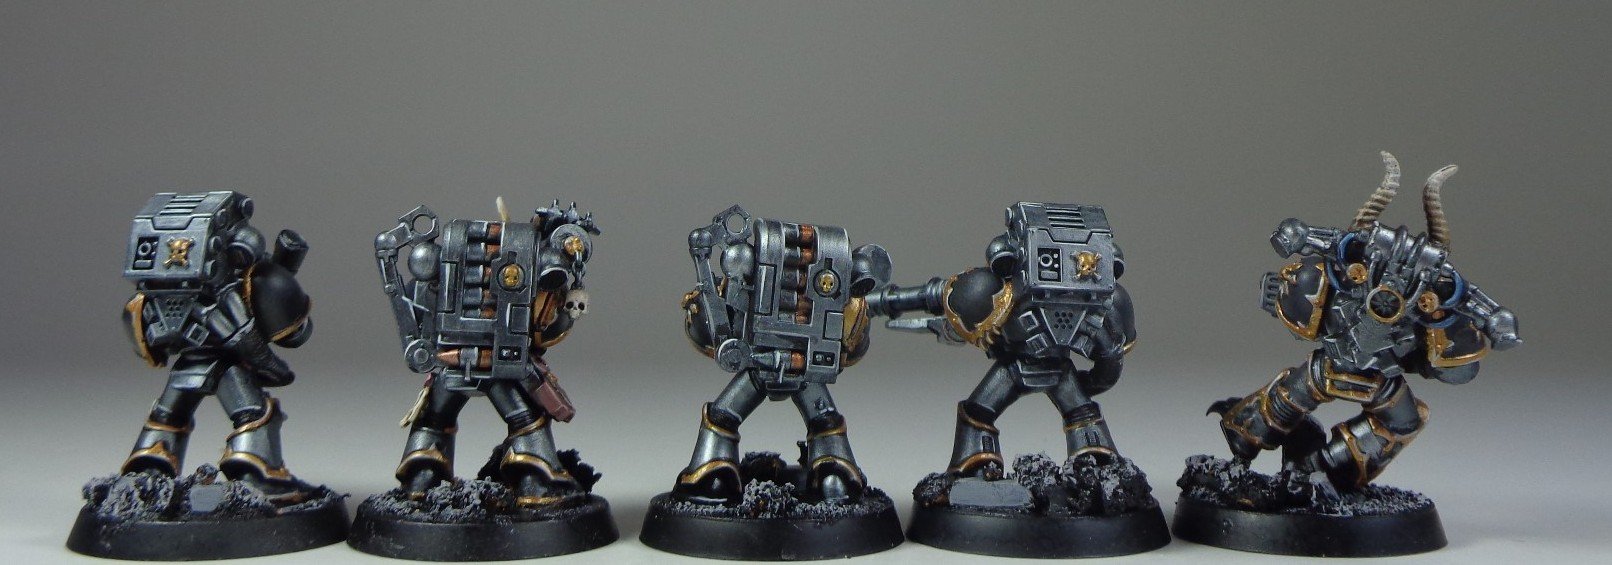 Painted some more tiny Iron Warriors : r/PrintedMinis